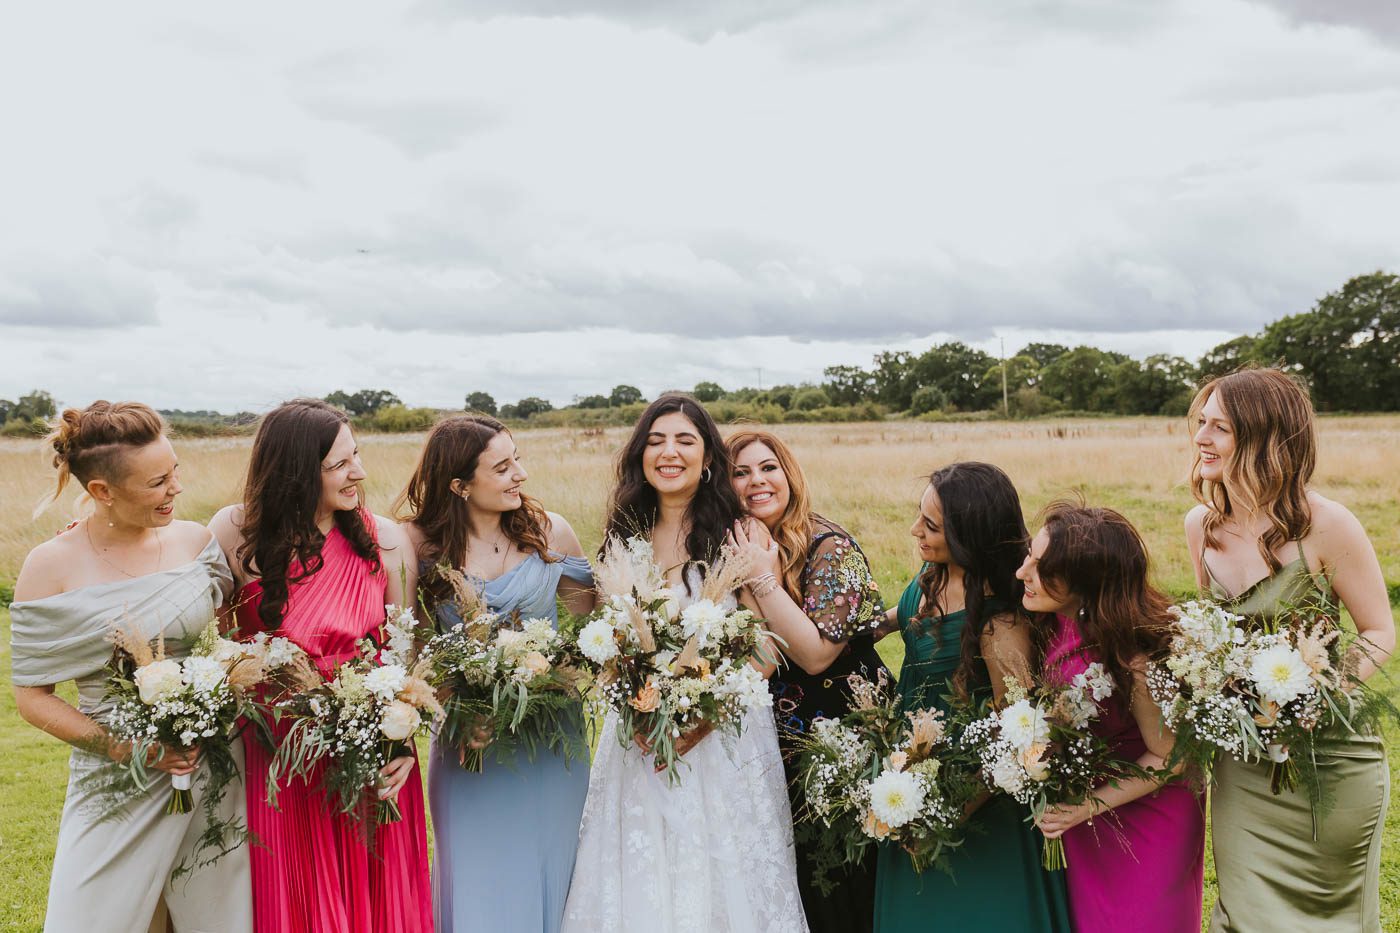 woodstock weddings photographer | photo of bride and bridesmaids with bouquets at woodstock weddings york | luxury barn wedding yorkshire